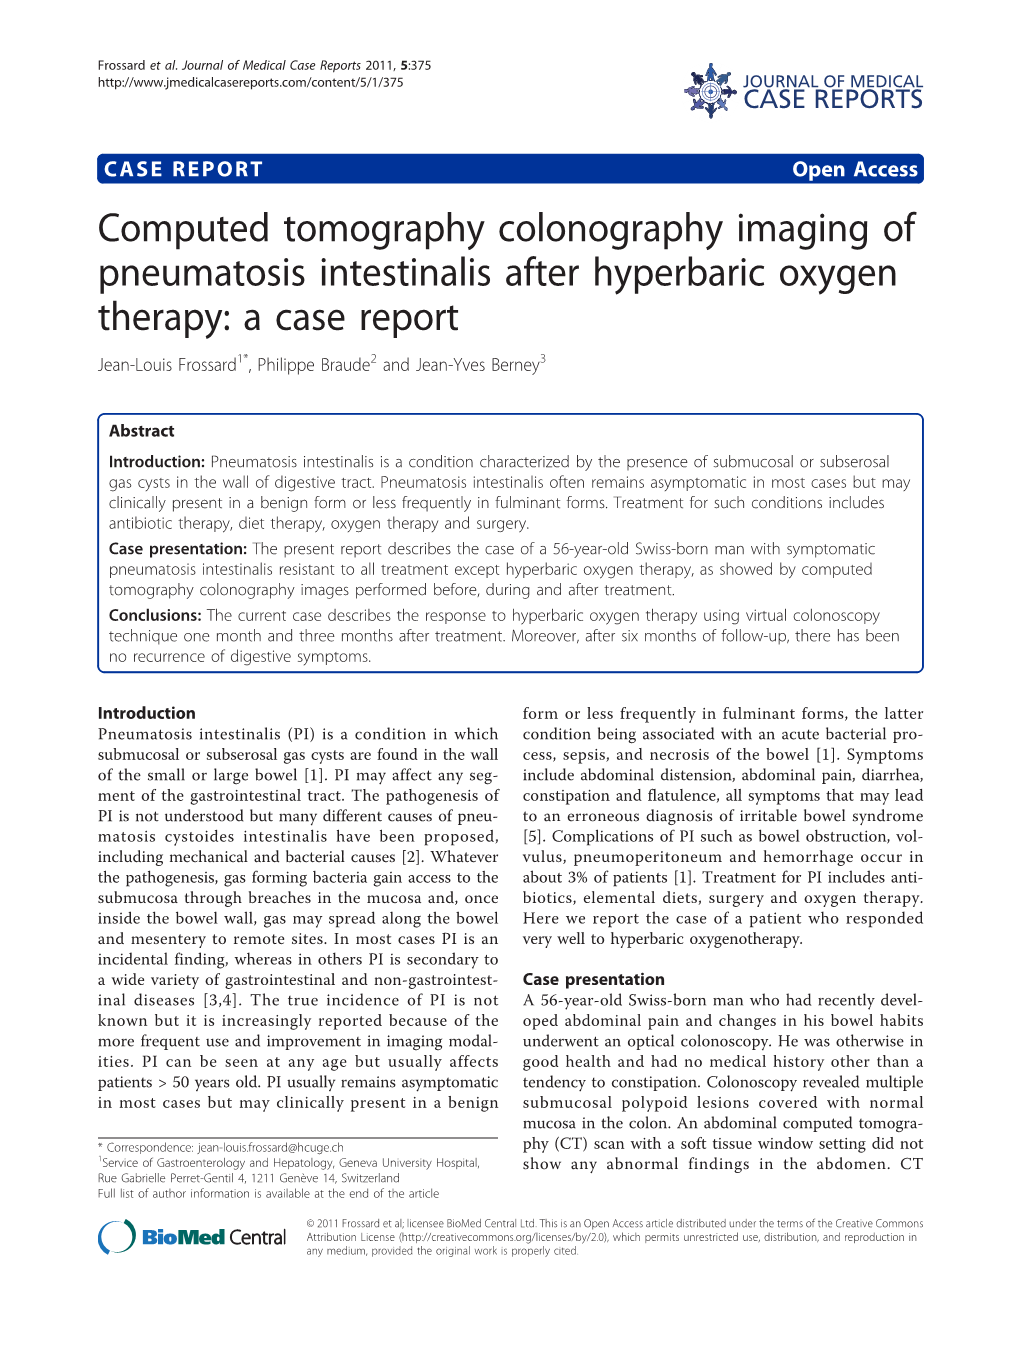 Computed Tomography Colonography Imaging of Pneumatosis Intestinalis